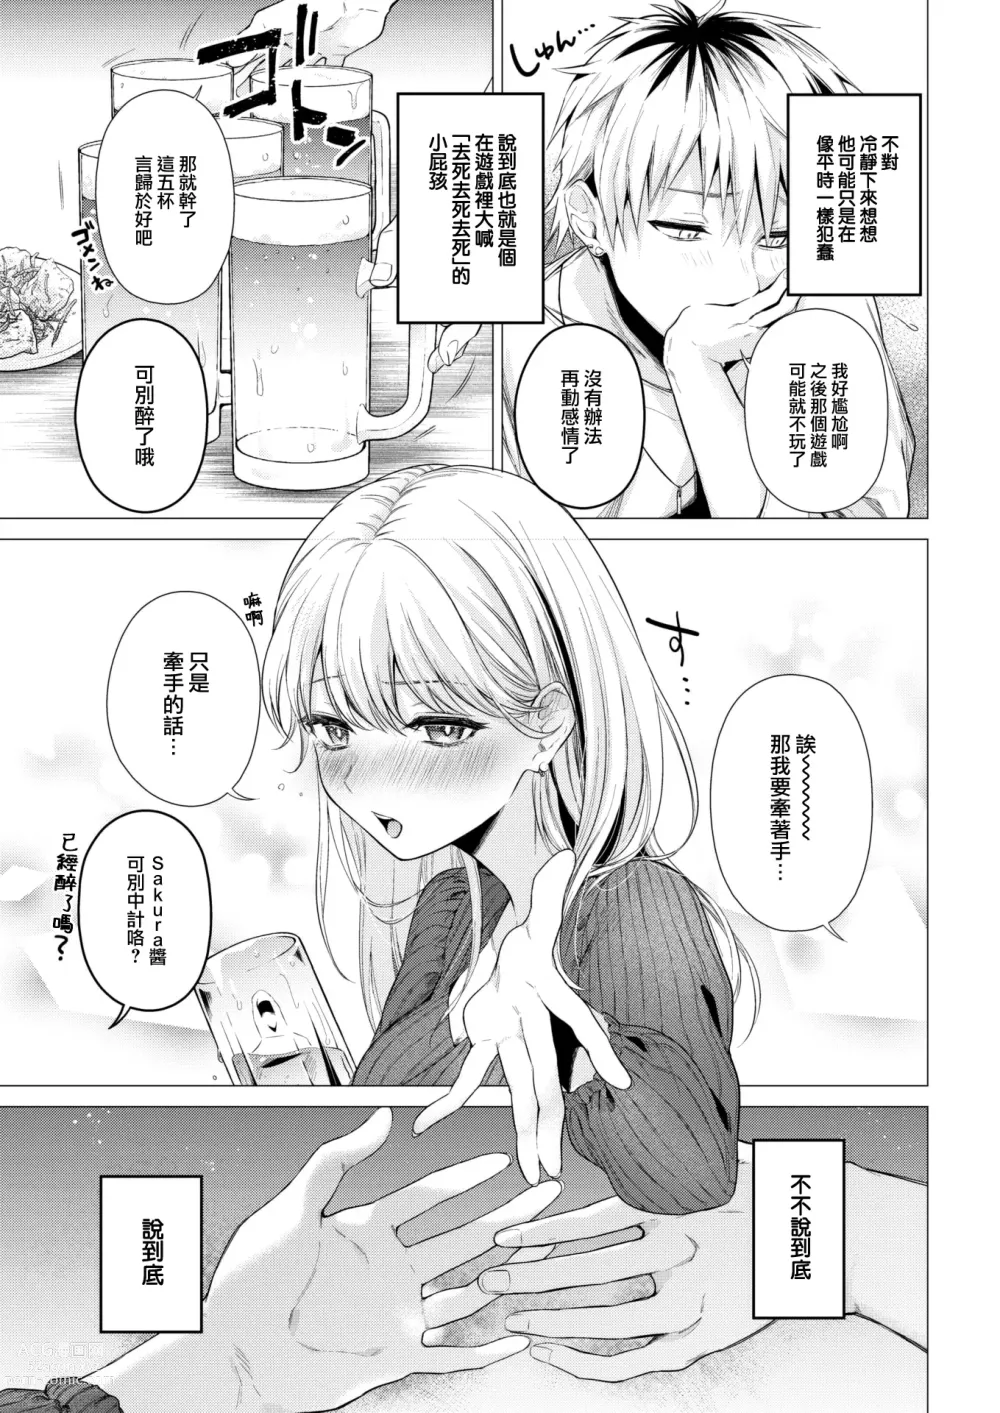 Page 12 of manga Zurukute Gomenne